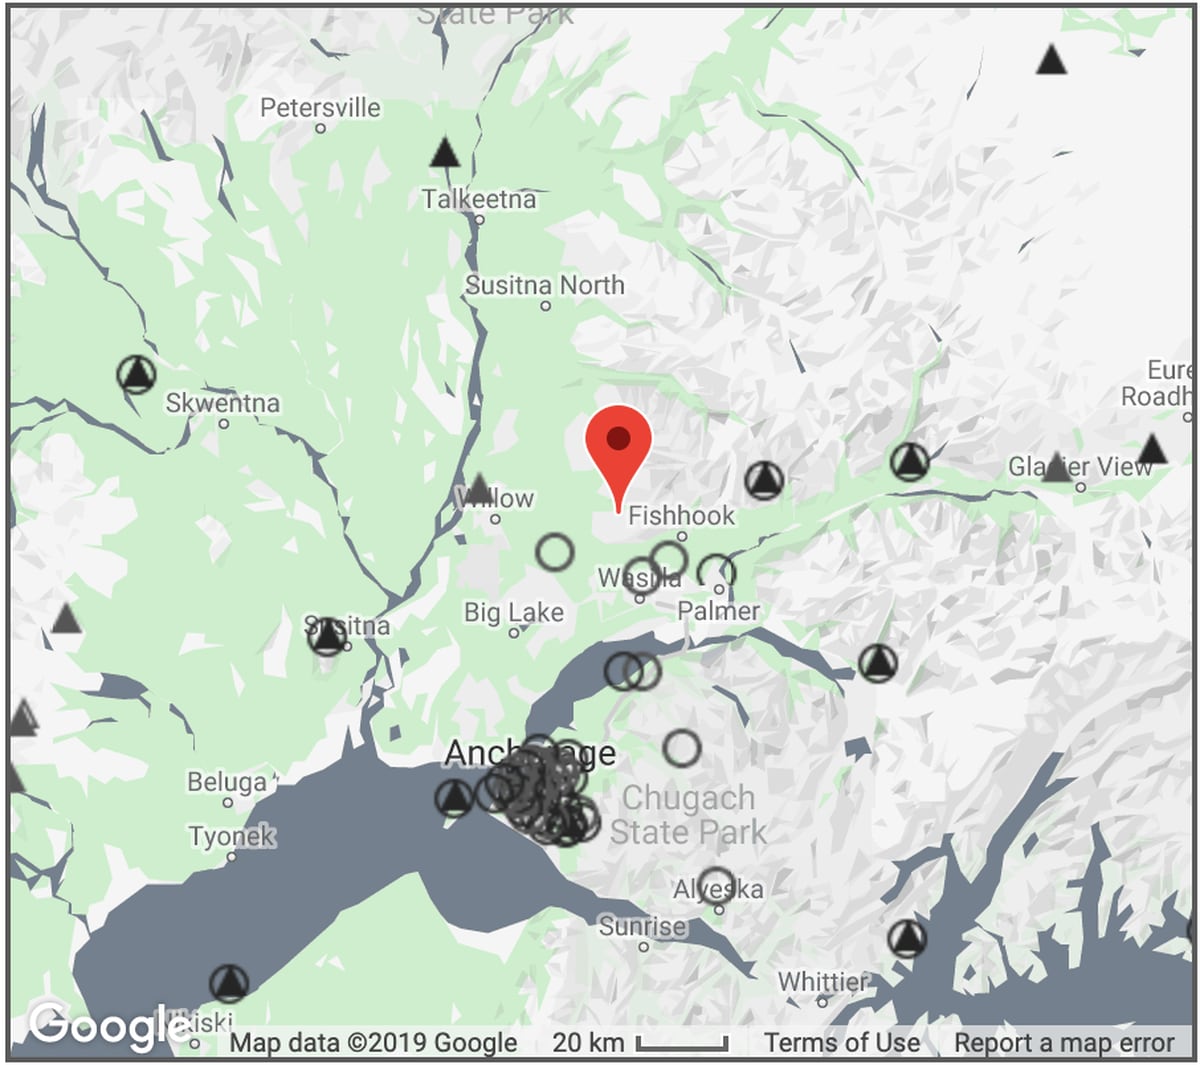 Magnitude 3.7 aftershock rumbles through Talkeetna Mountains